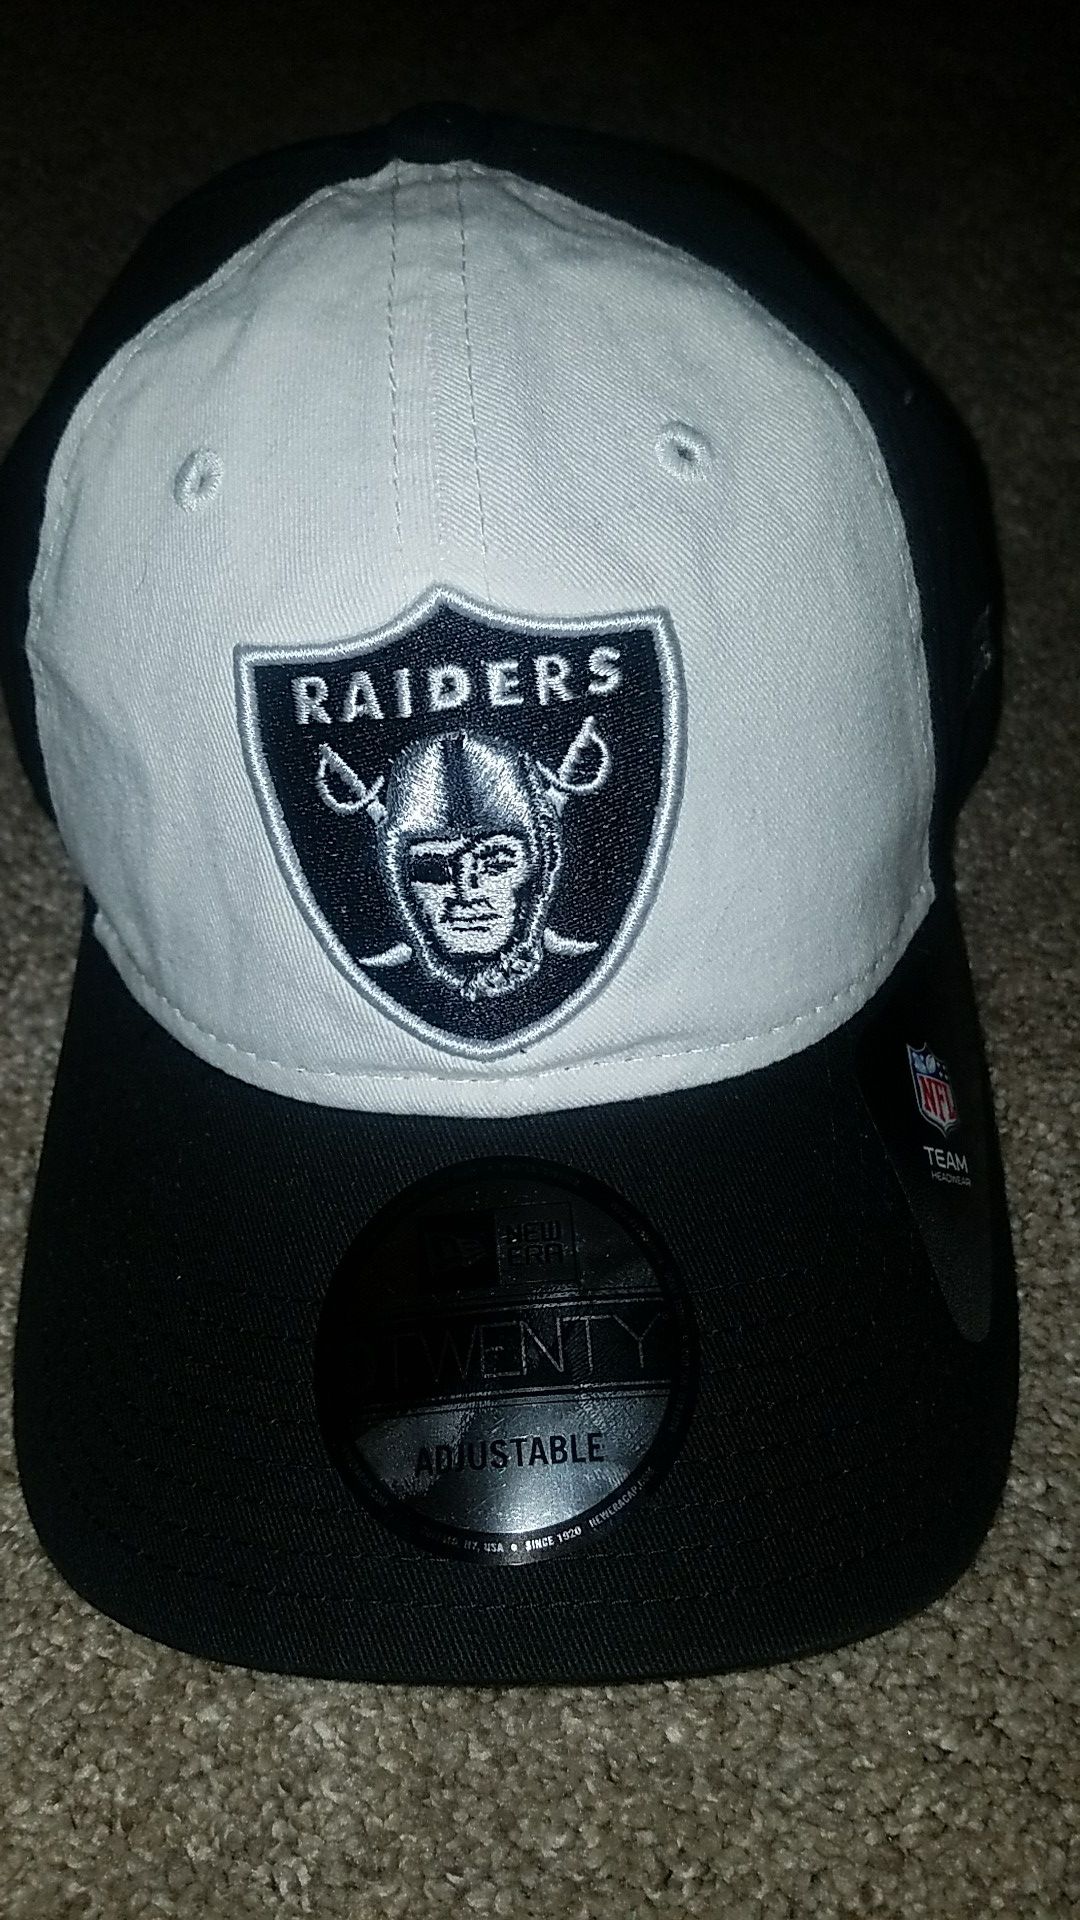 Raiders hat